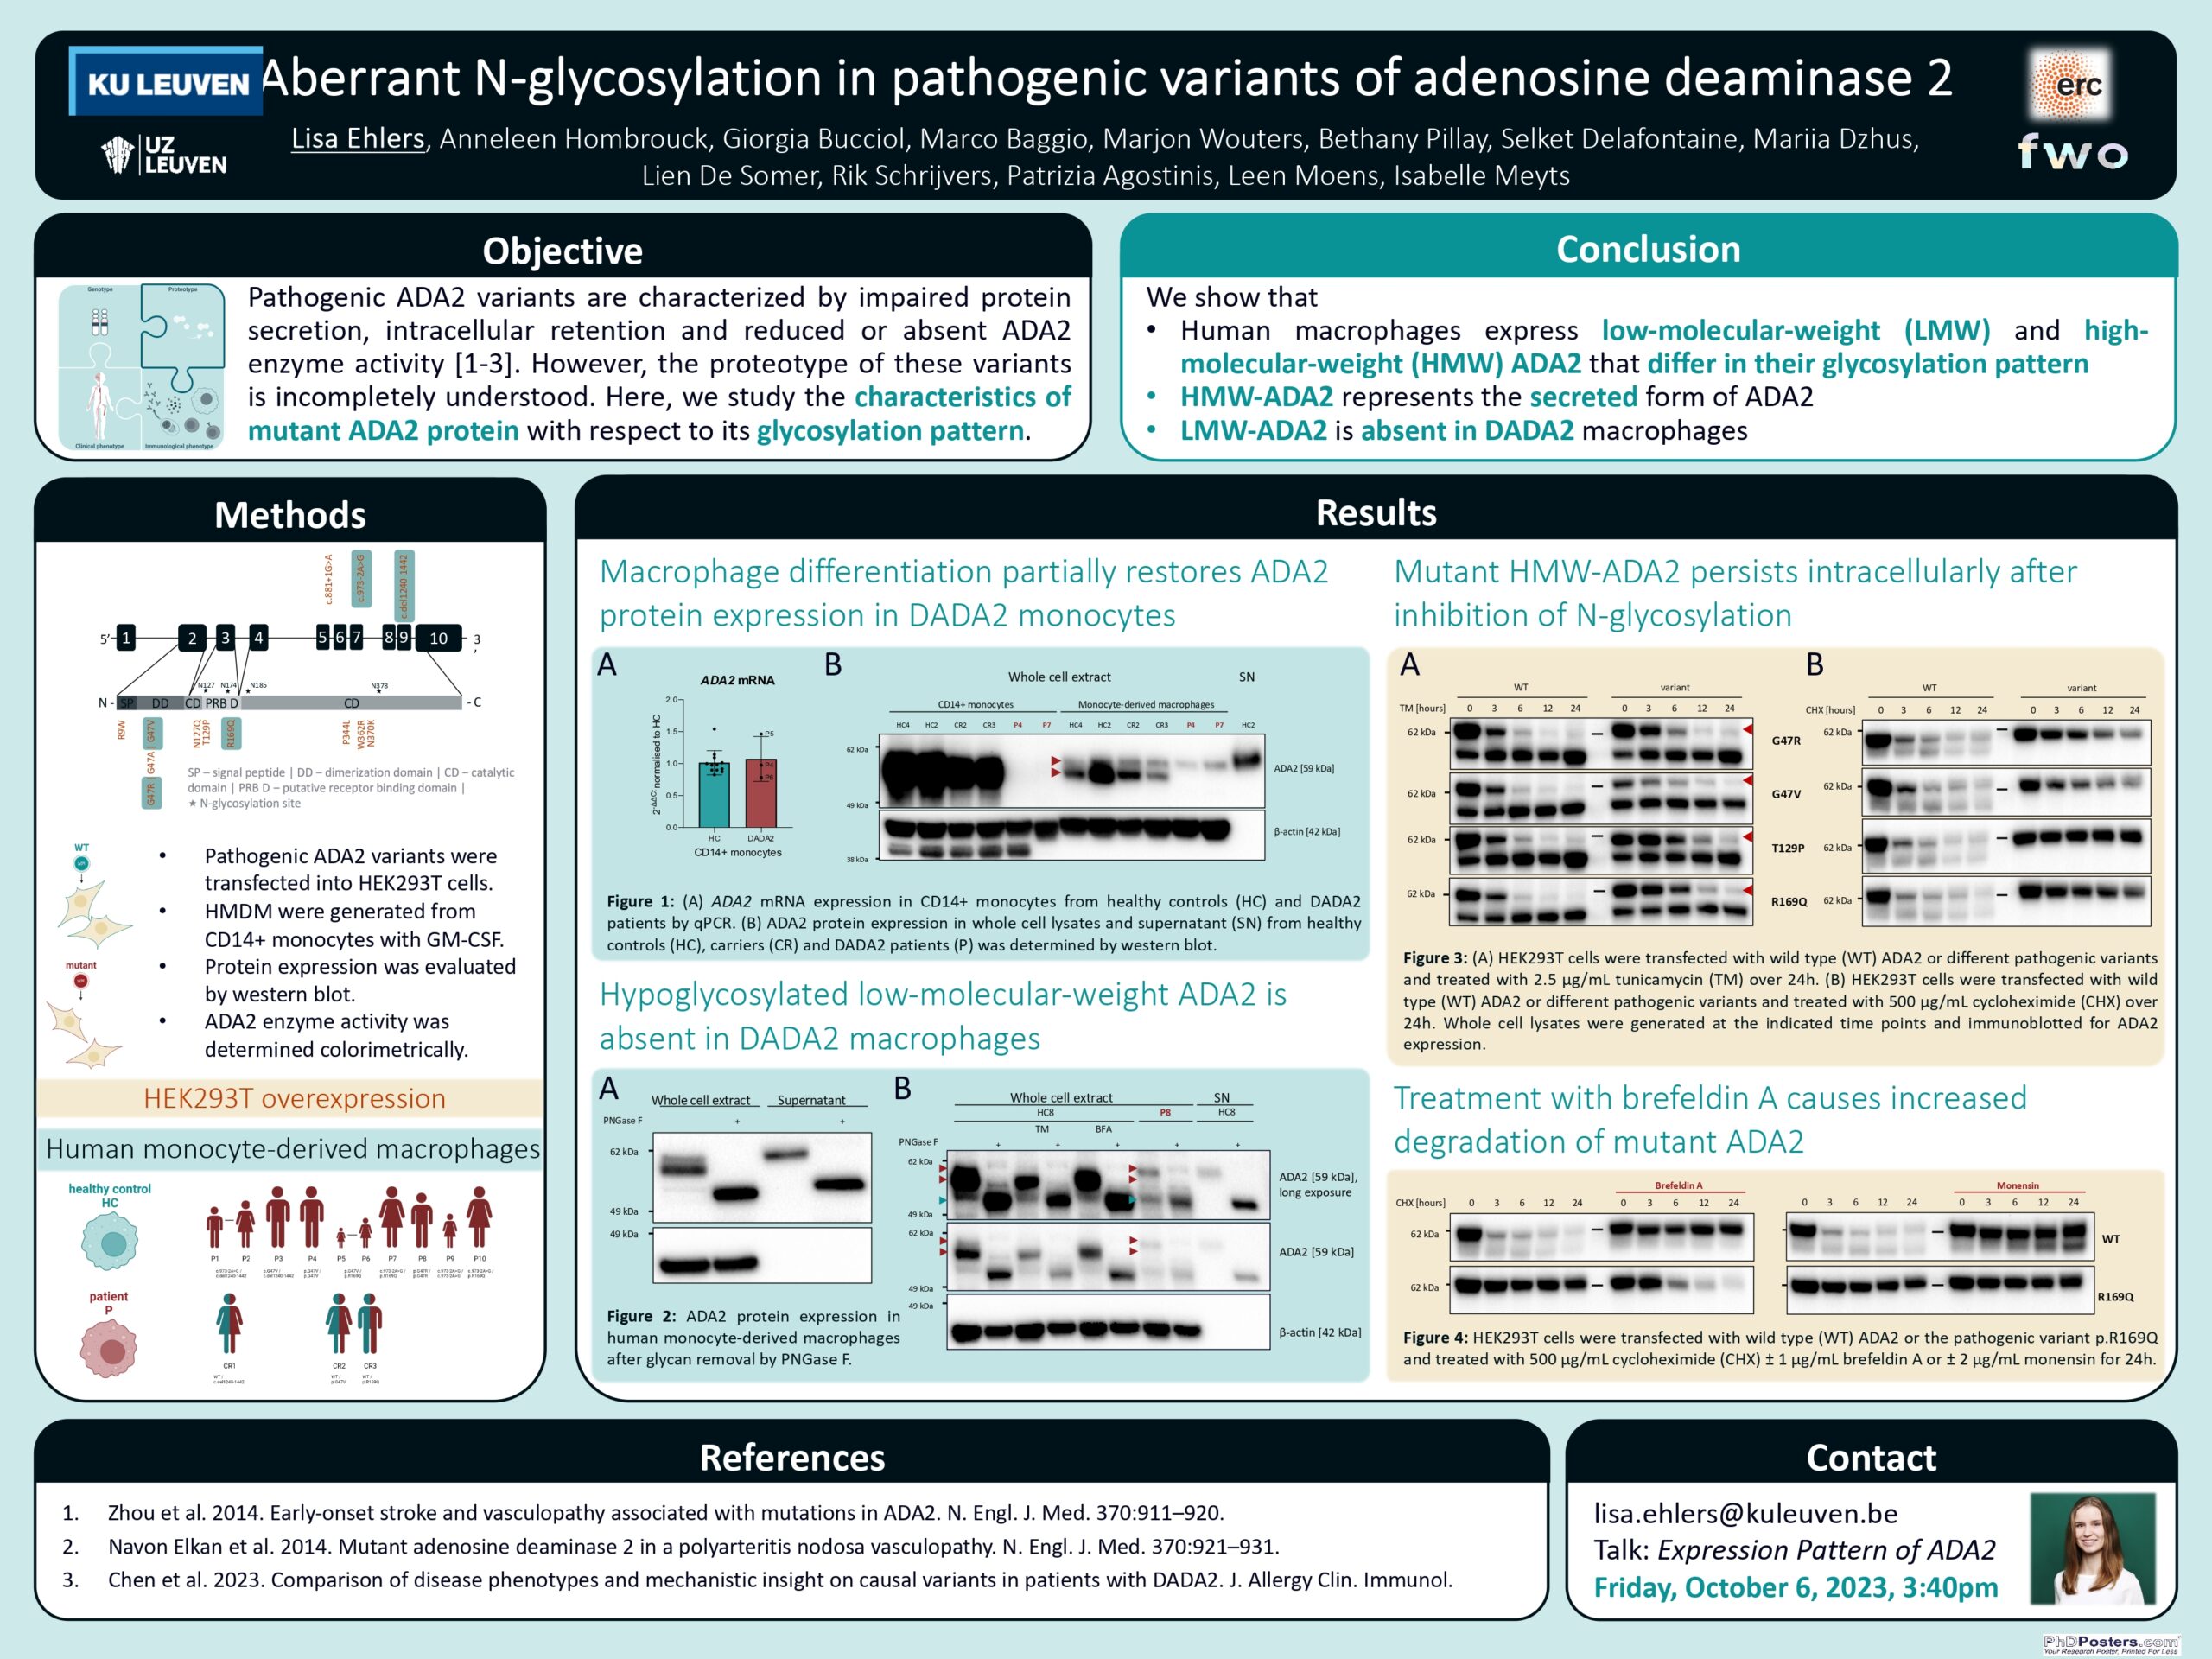 Lisa Ehlers - Aberrant N-glycosylation in pathogenic variants of adenosine deaminase 2